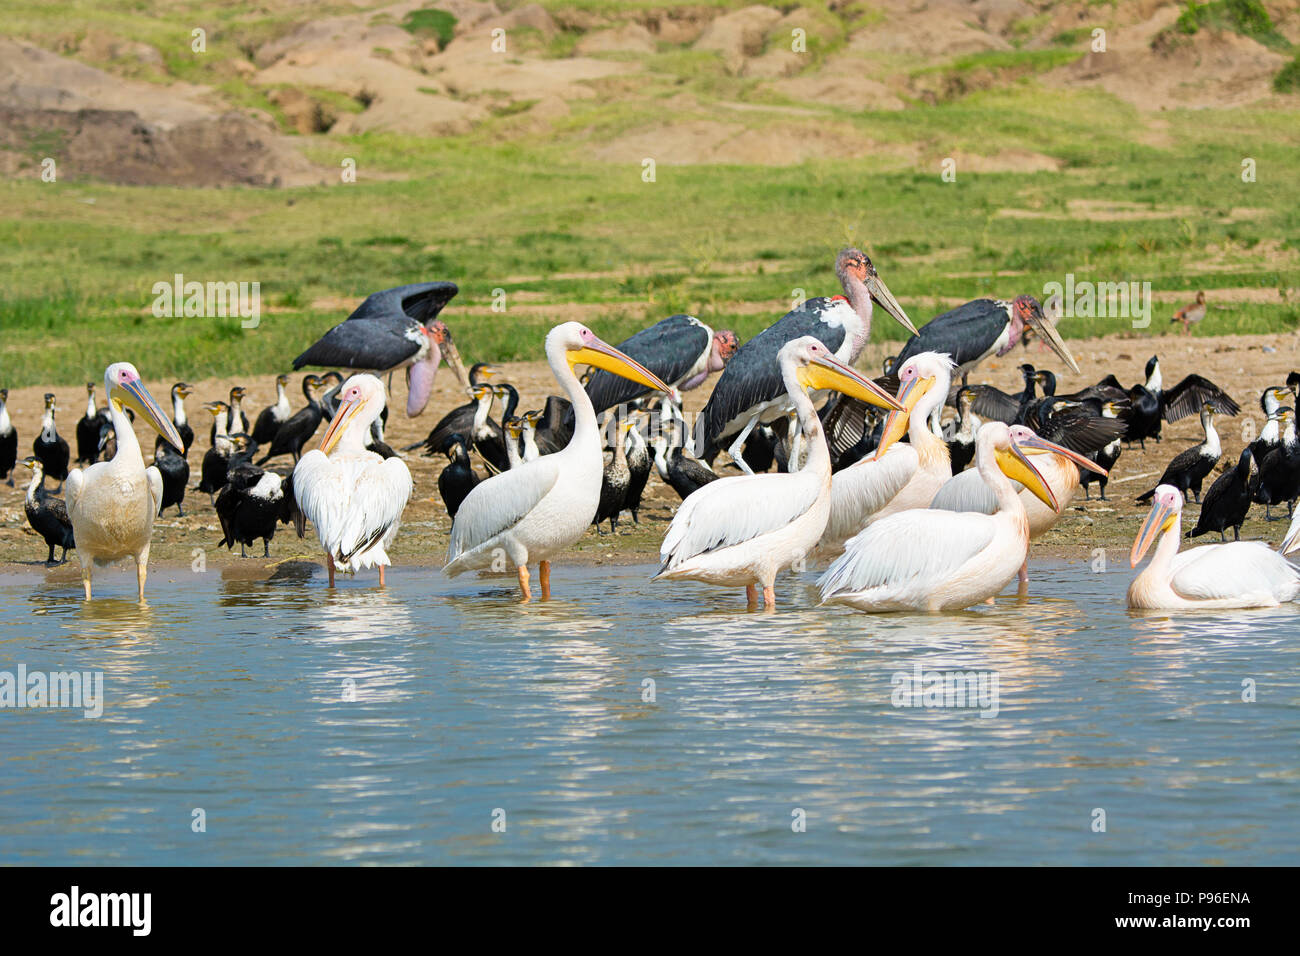 Große Weiße Pelikane, Pelikan, Weiße Breasted Kormoran, Kormorane und Marabou Störche, Vögel Kazinga Kanal, Queen Elizabeth National Park, Uganda Stockfoto